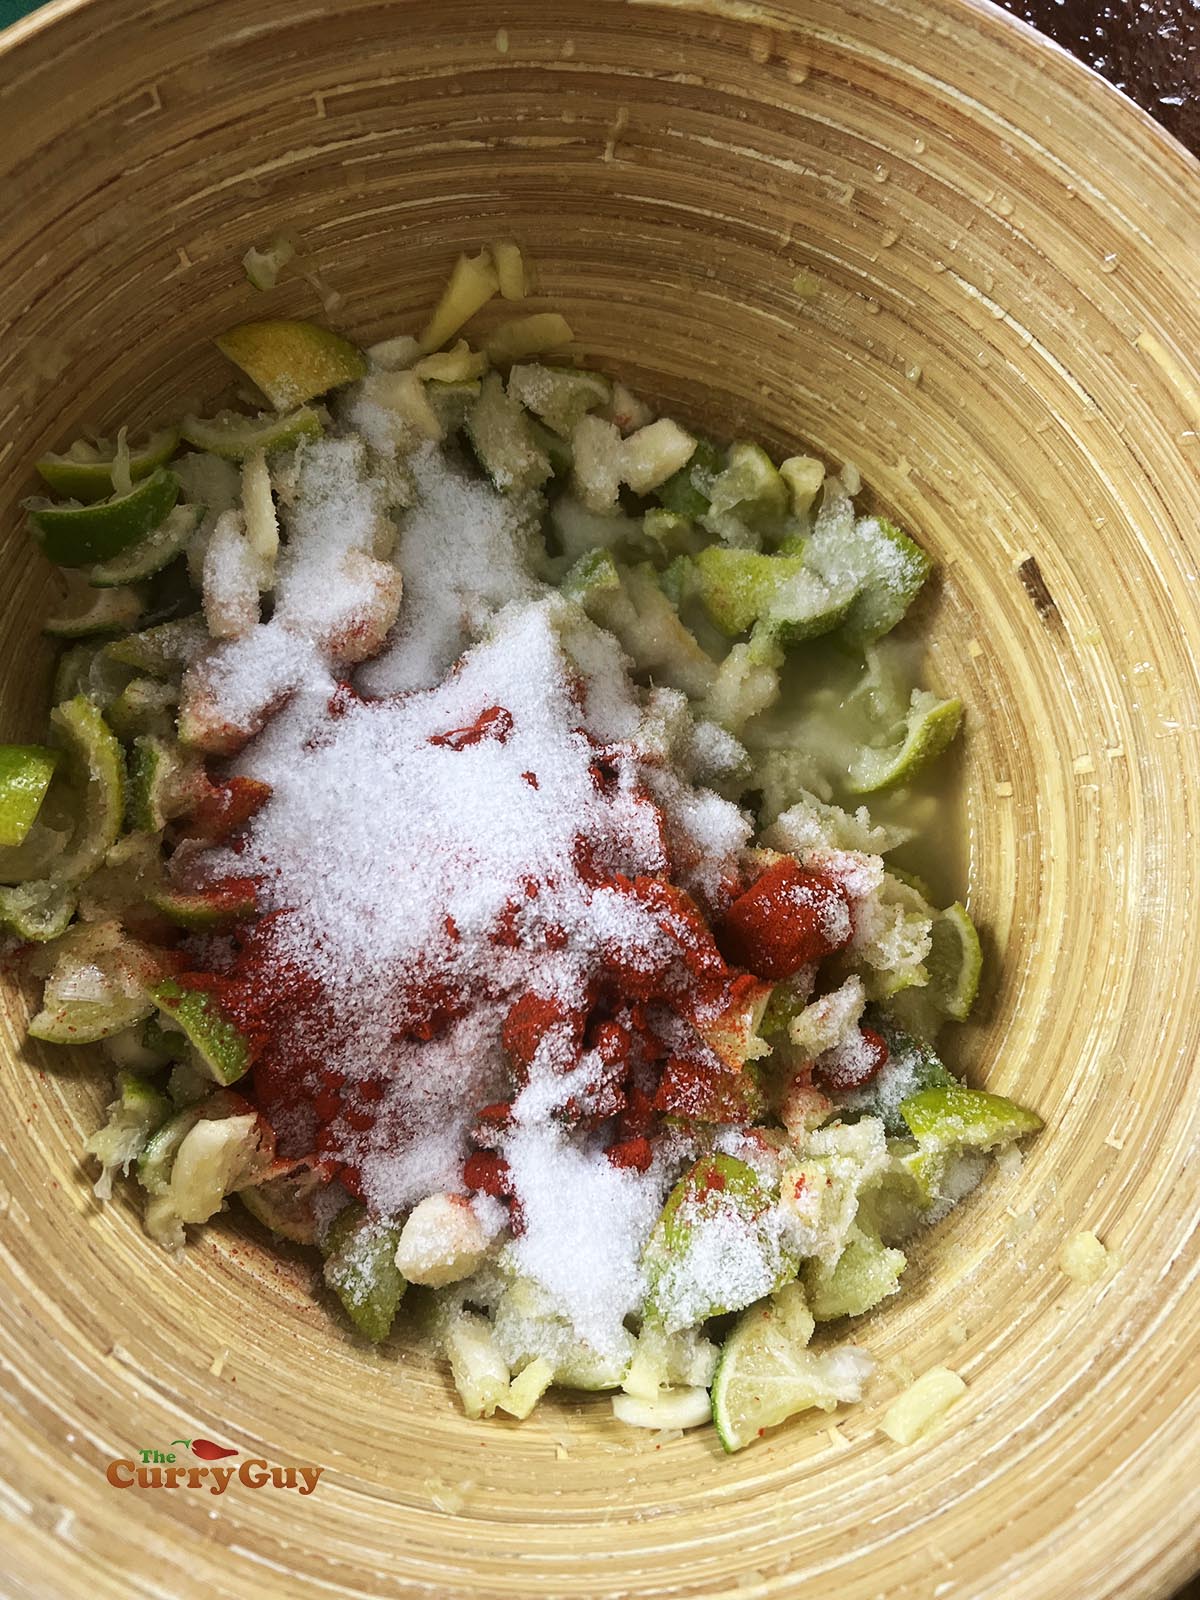 Adding chilli powder and salt